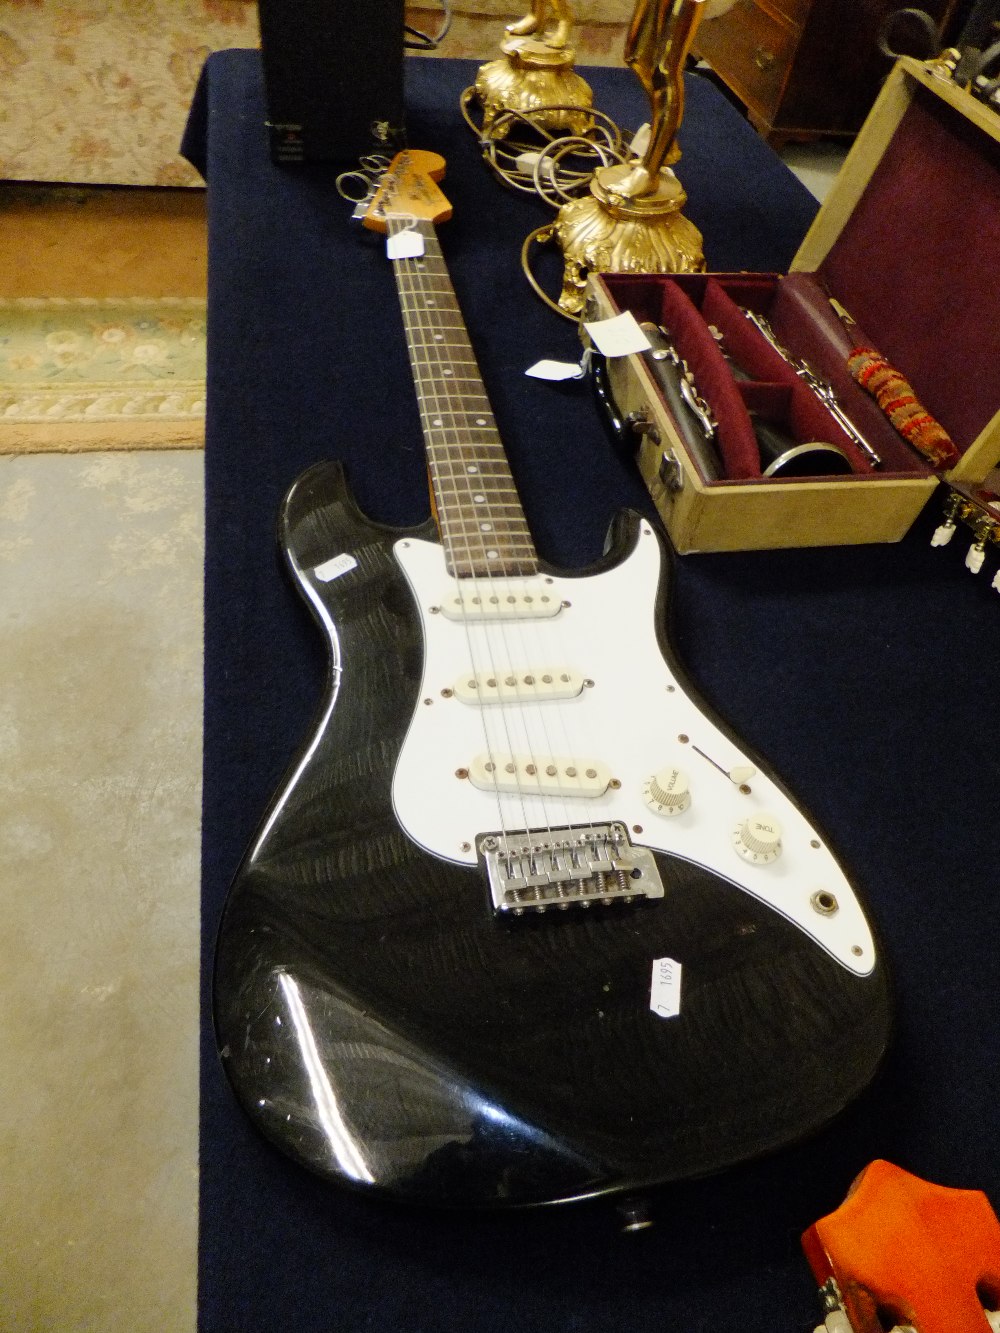 A Fender Squier 'Bullet' electric guitar having black gloss finish and a B.B. Blaster 10 watt